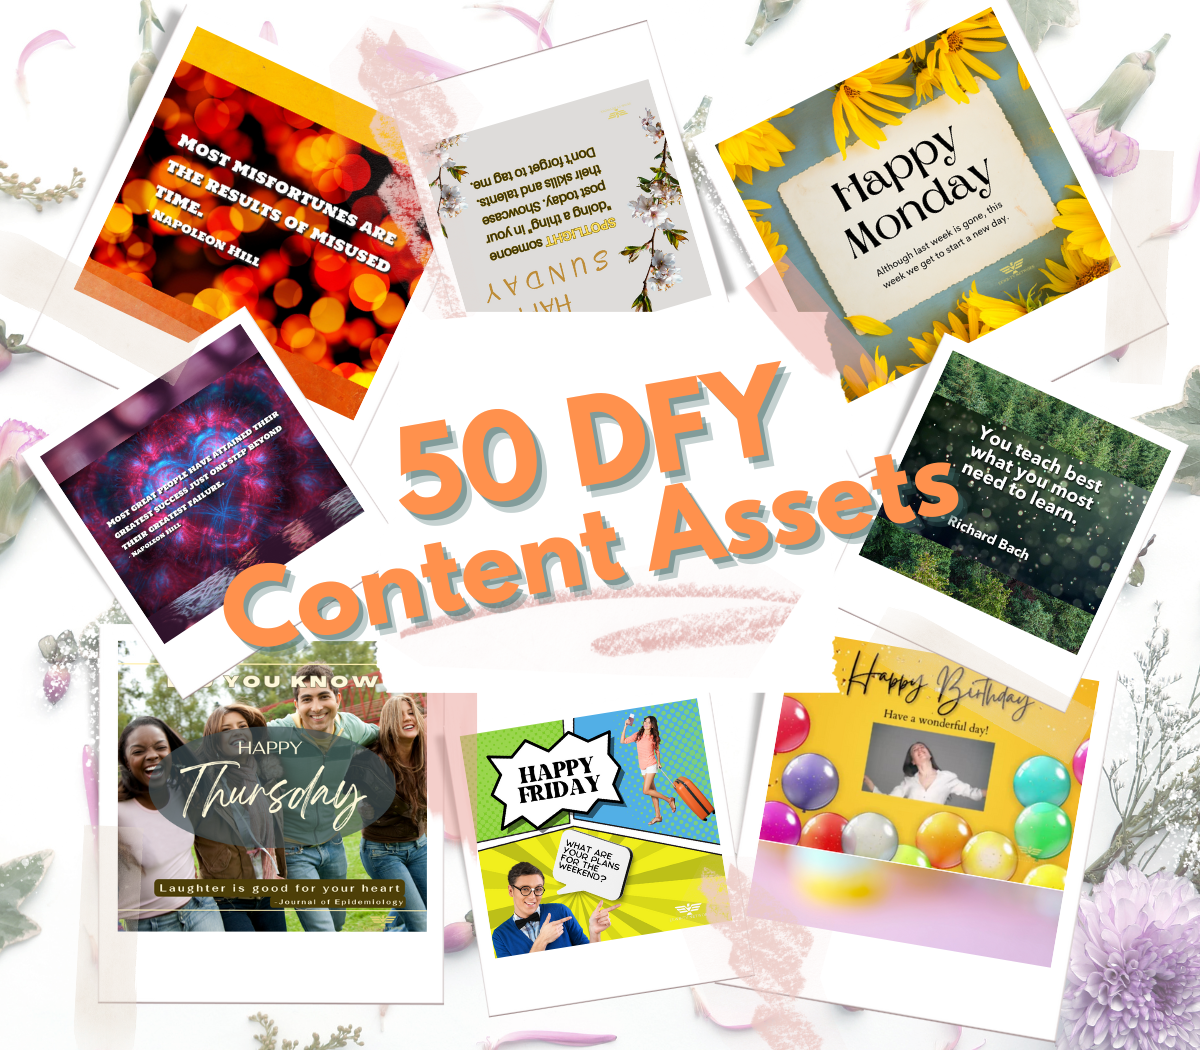 50 DFY Content Multimedia Assets